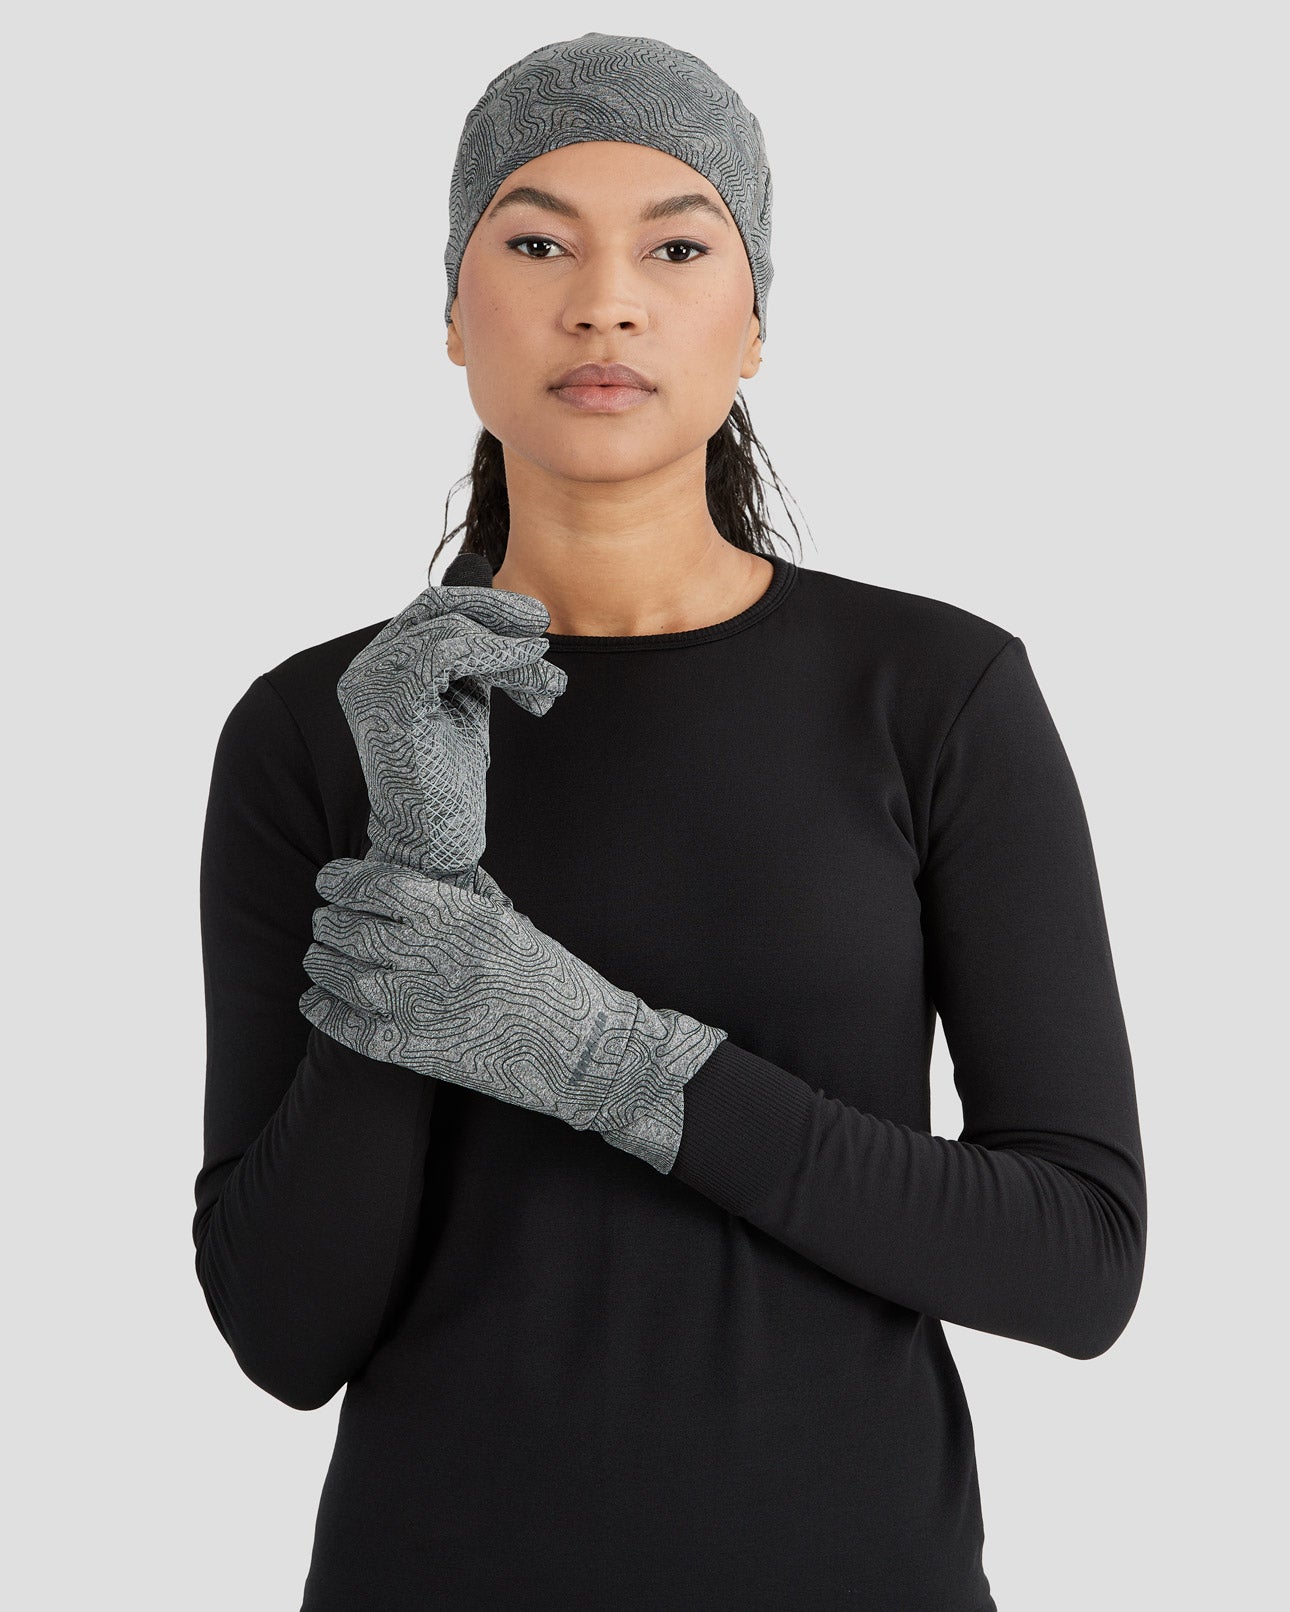 3.0 Women's Below-Zero Heavyweight Warm Gloves